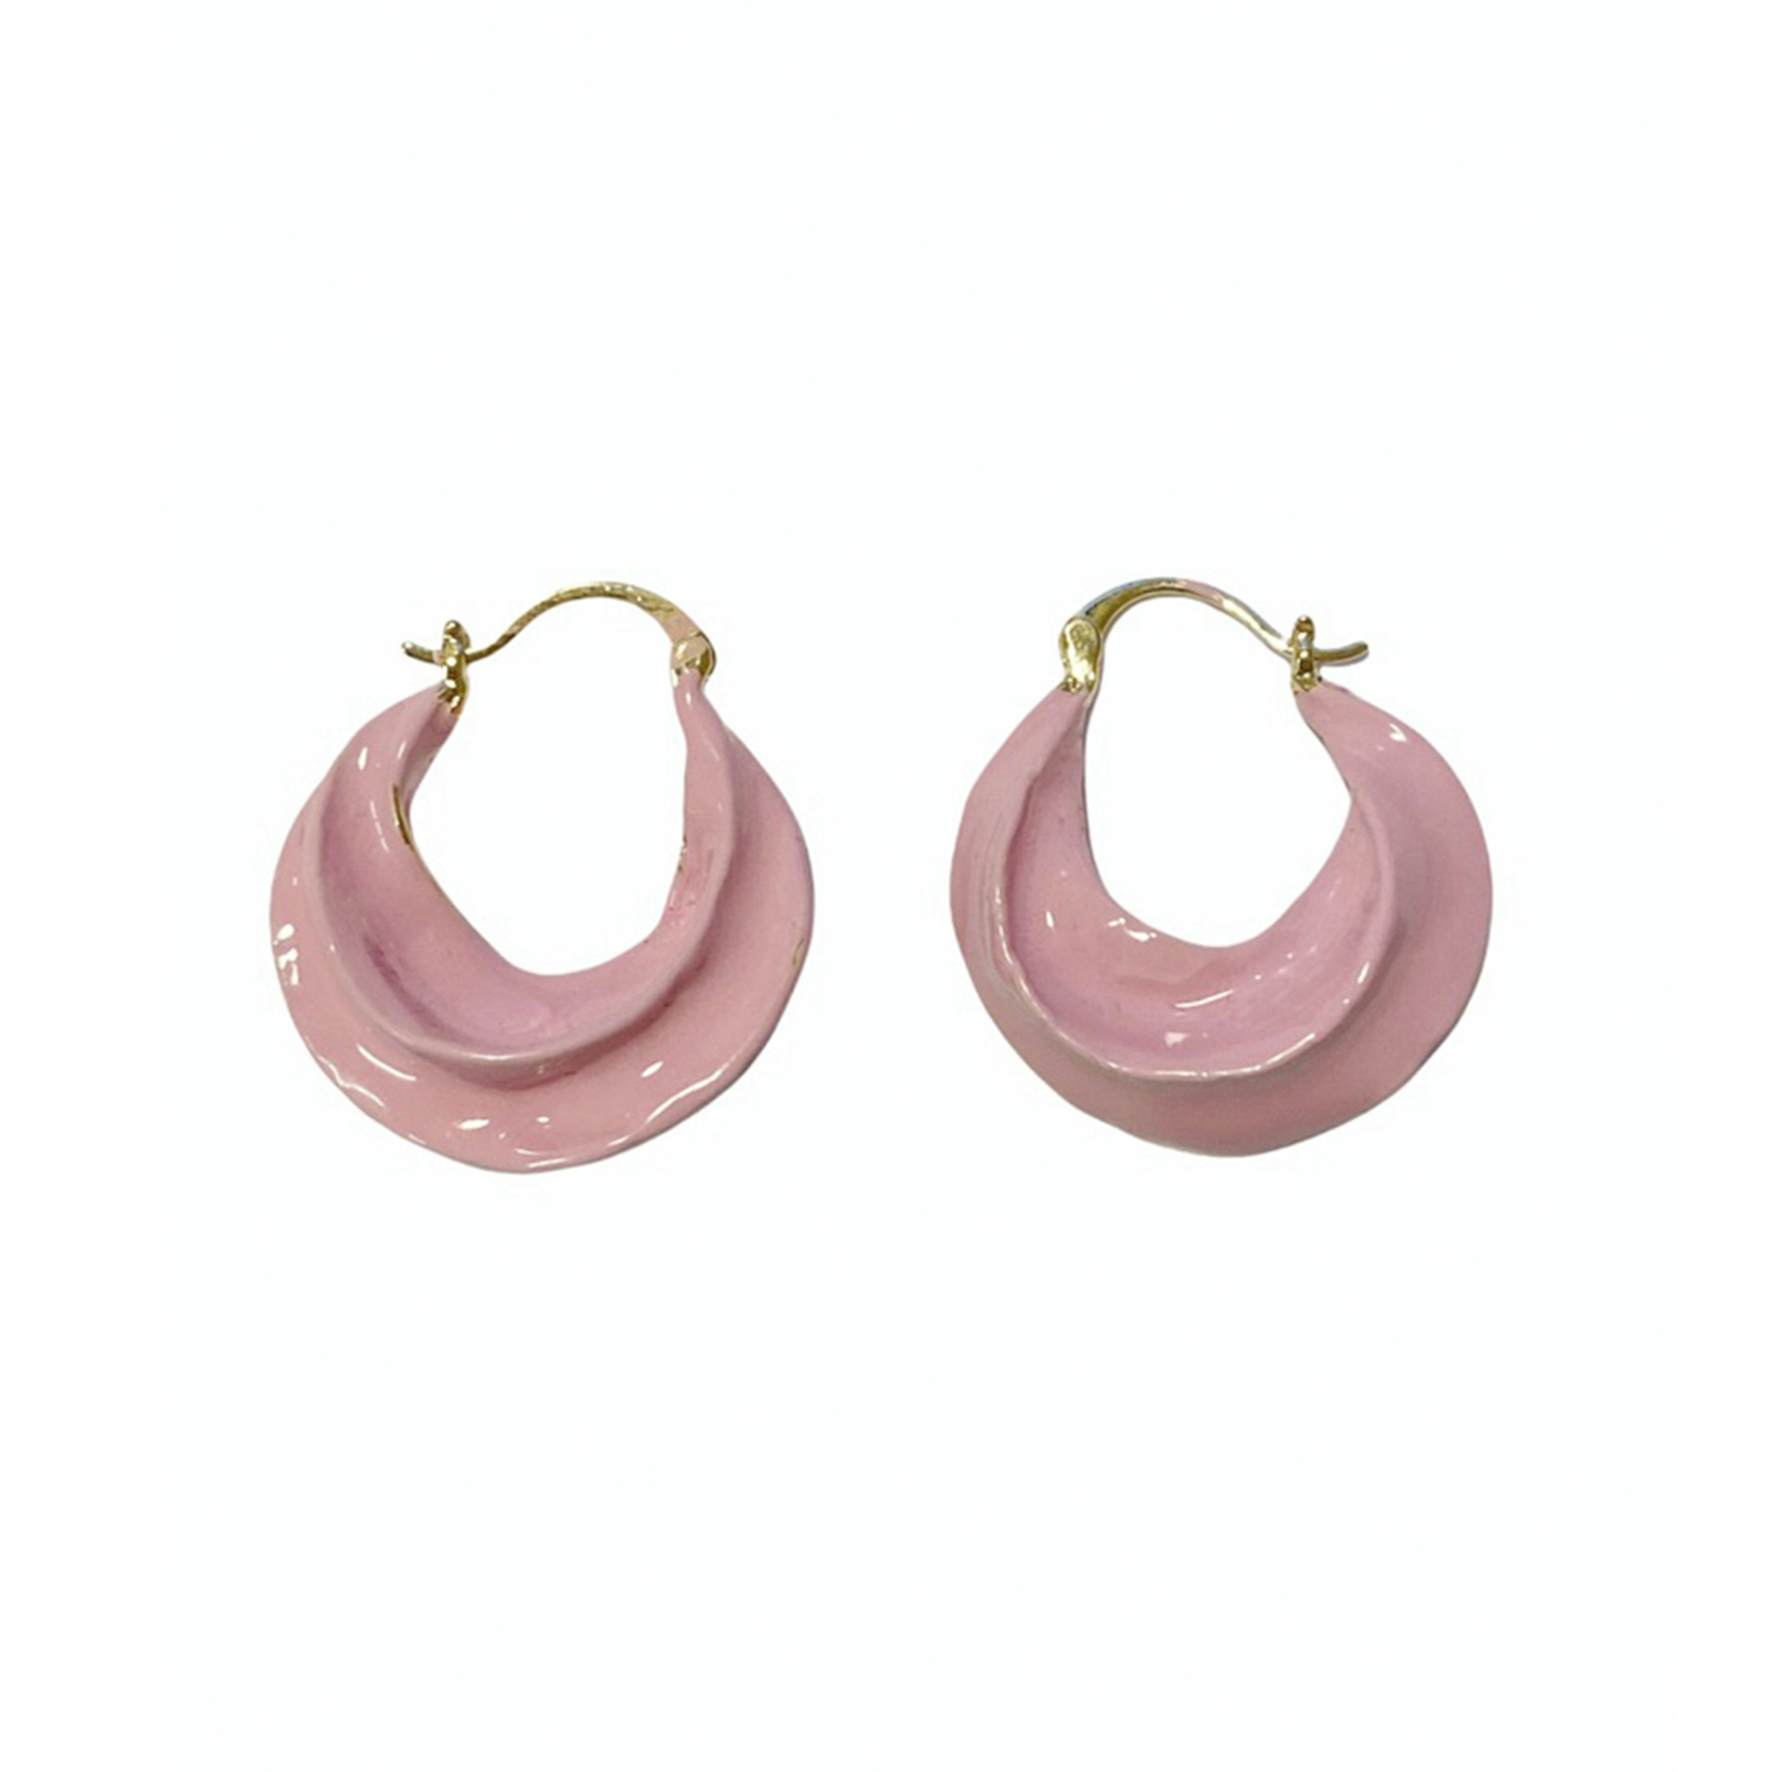 Africa Enamel Earrings Baby Pink von Pico in Vergoldet-Silber Sterling 925